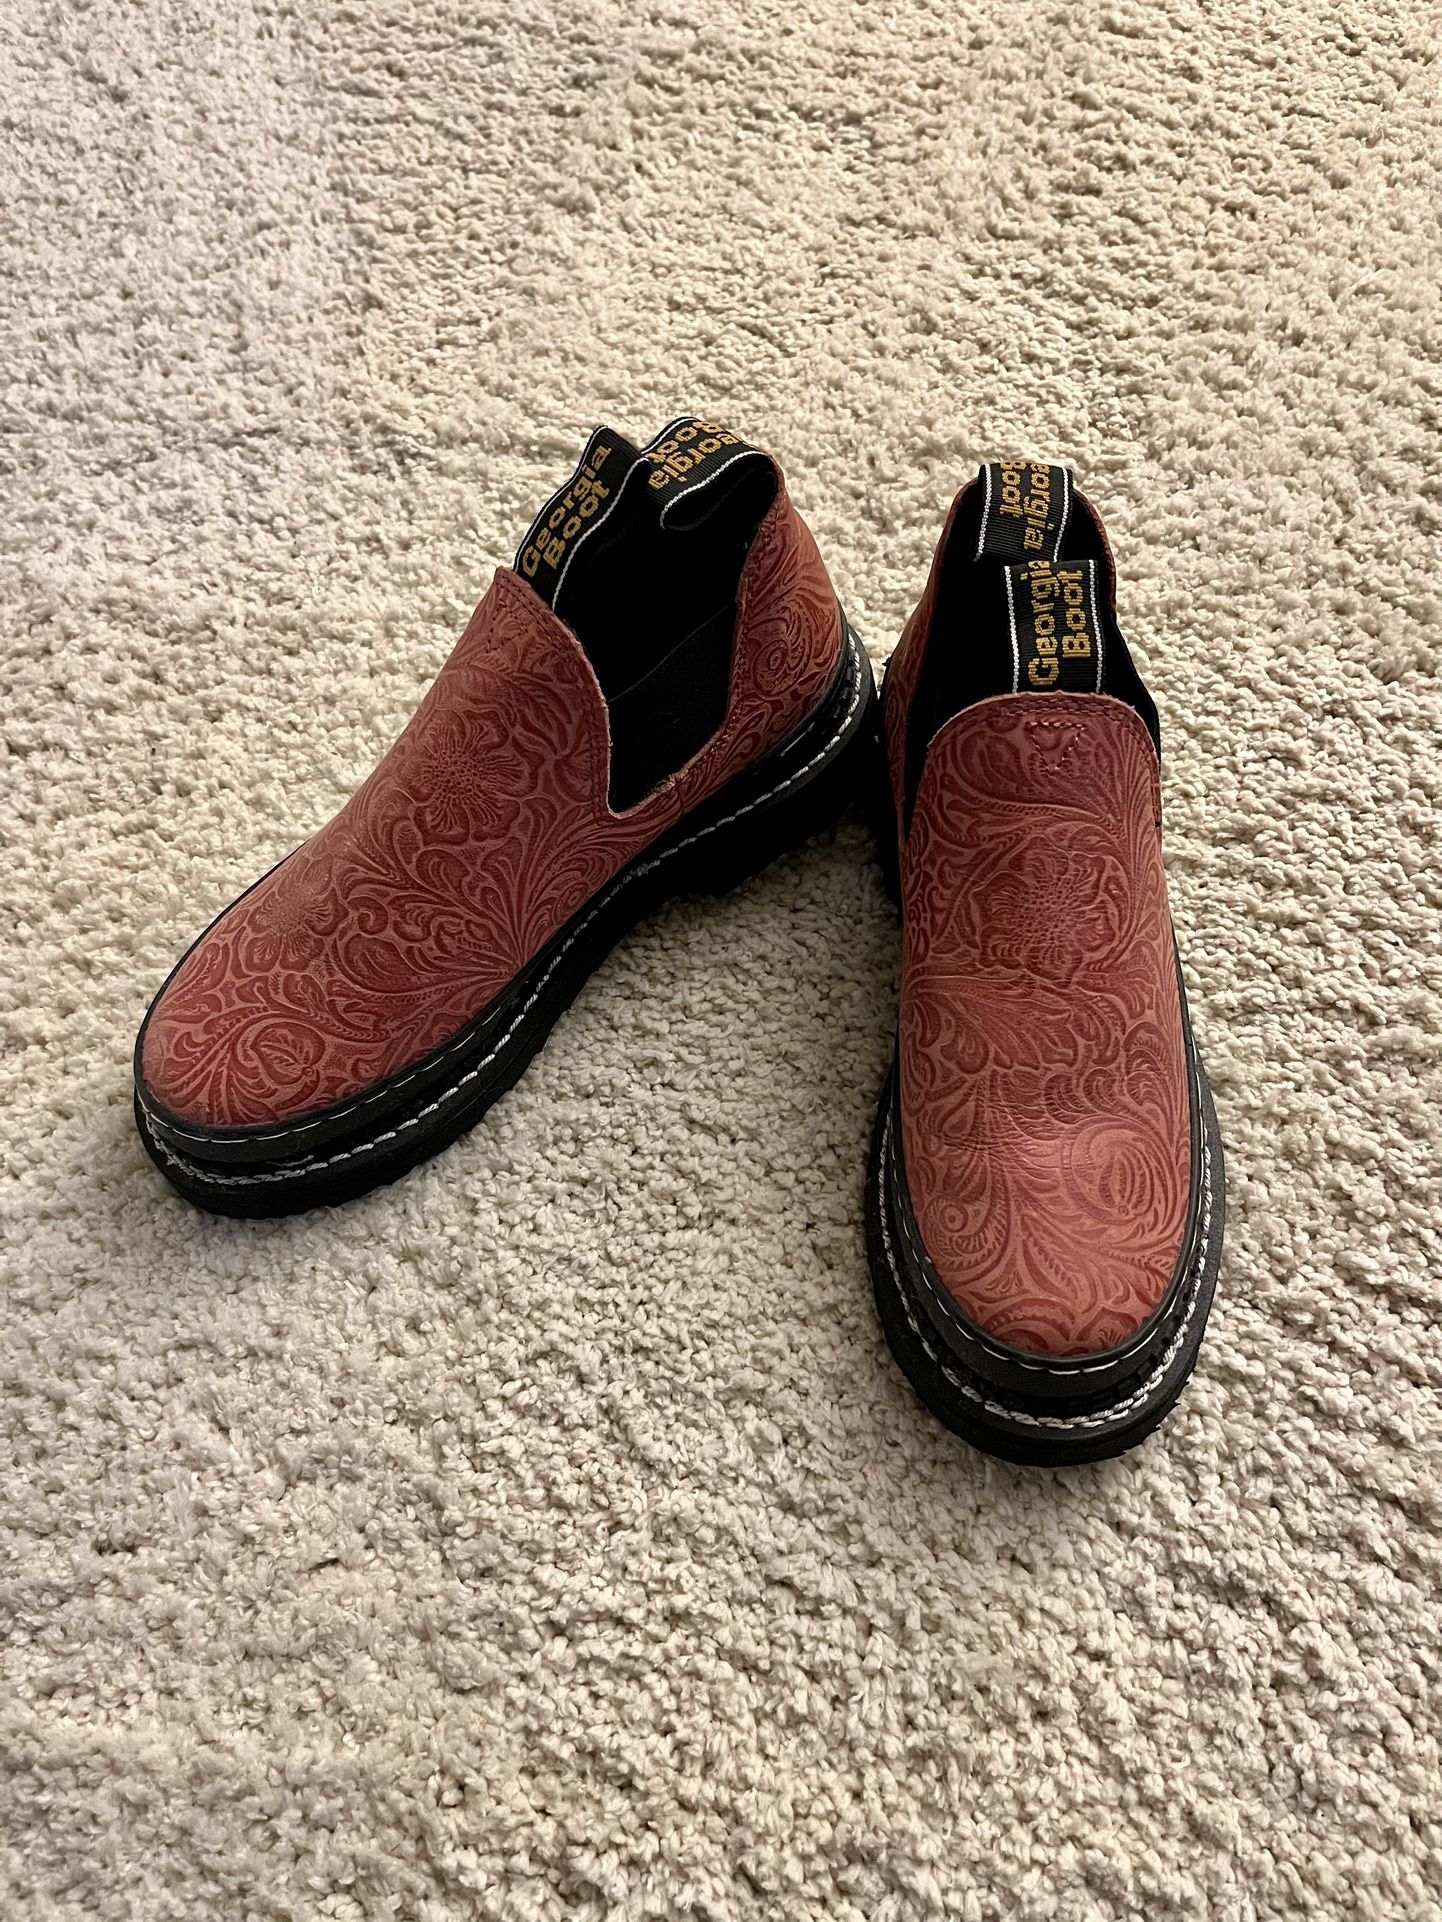 New Georgia Boots